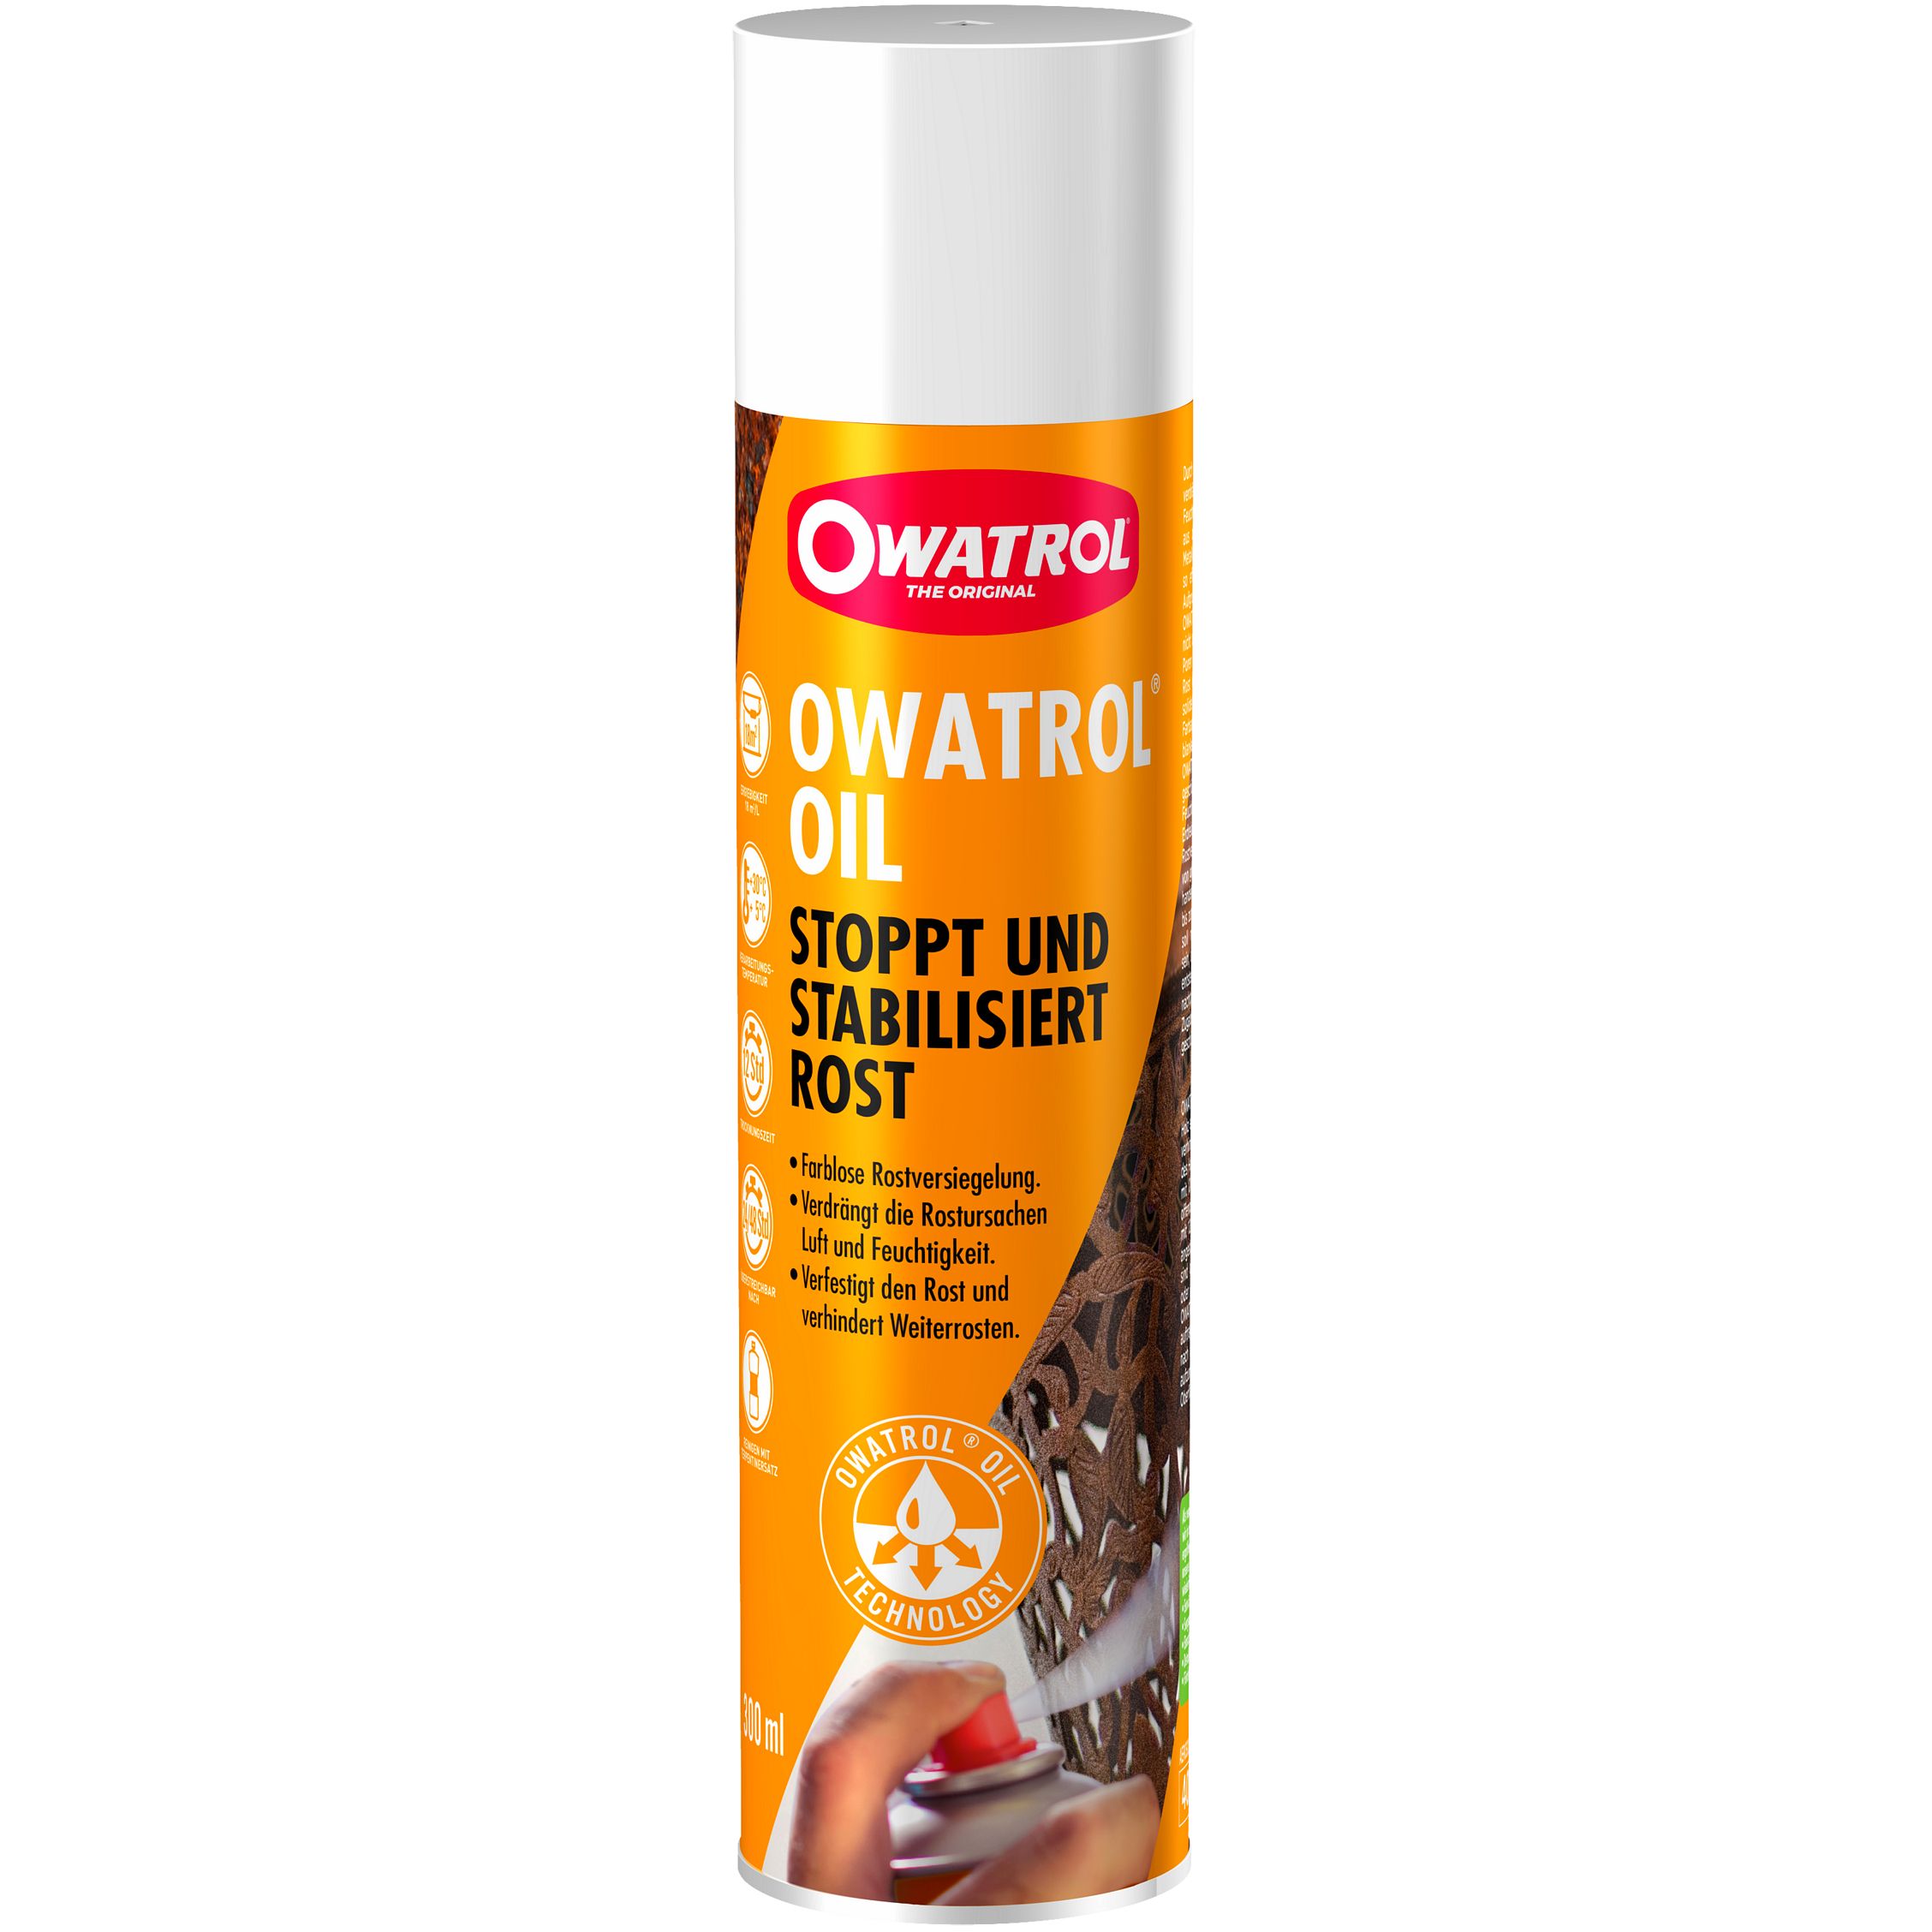 OWATROL - Groupe DURIEU Owatrol Oil Spray online kaufen